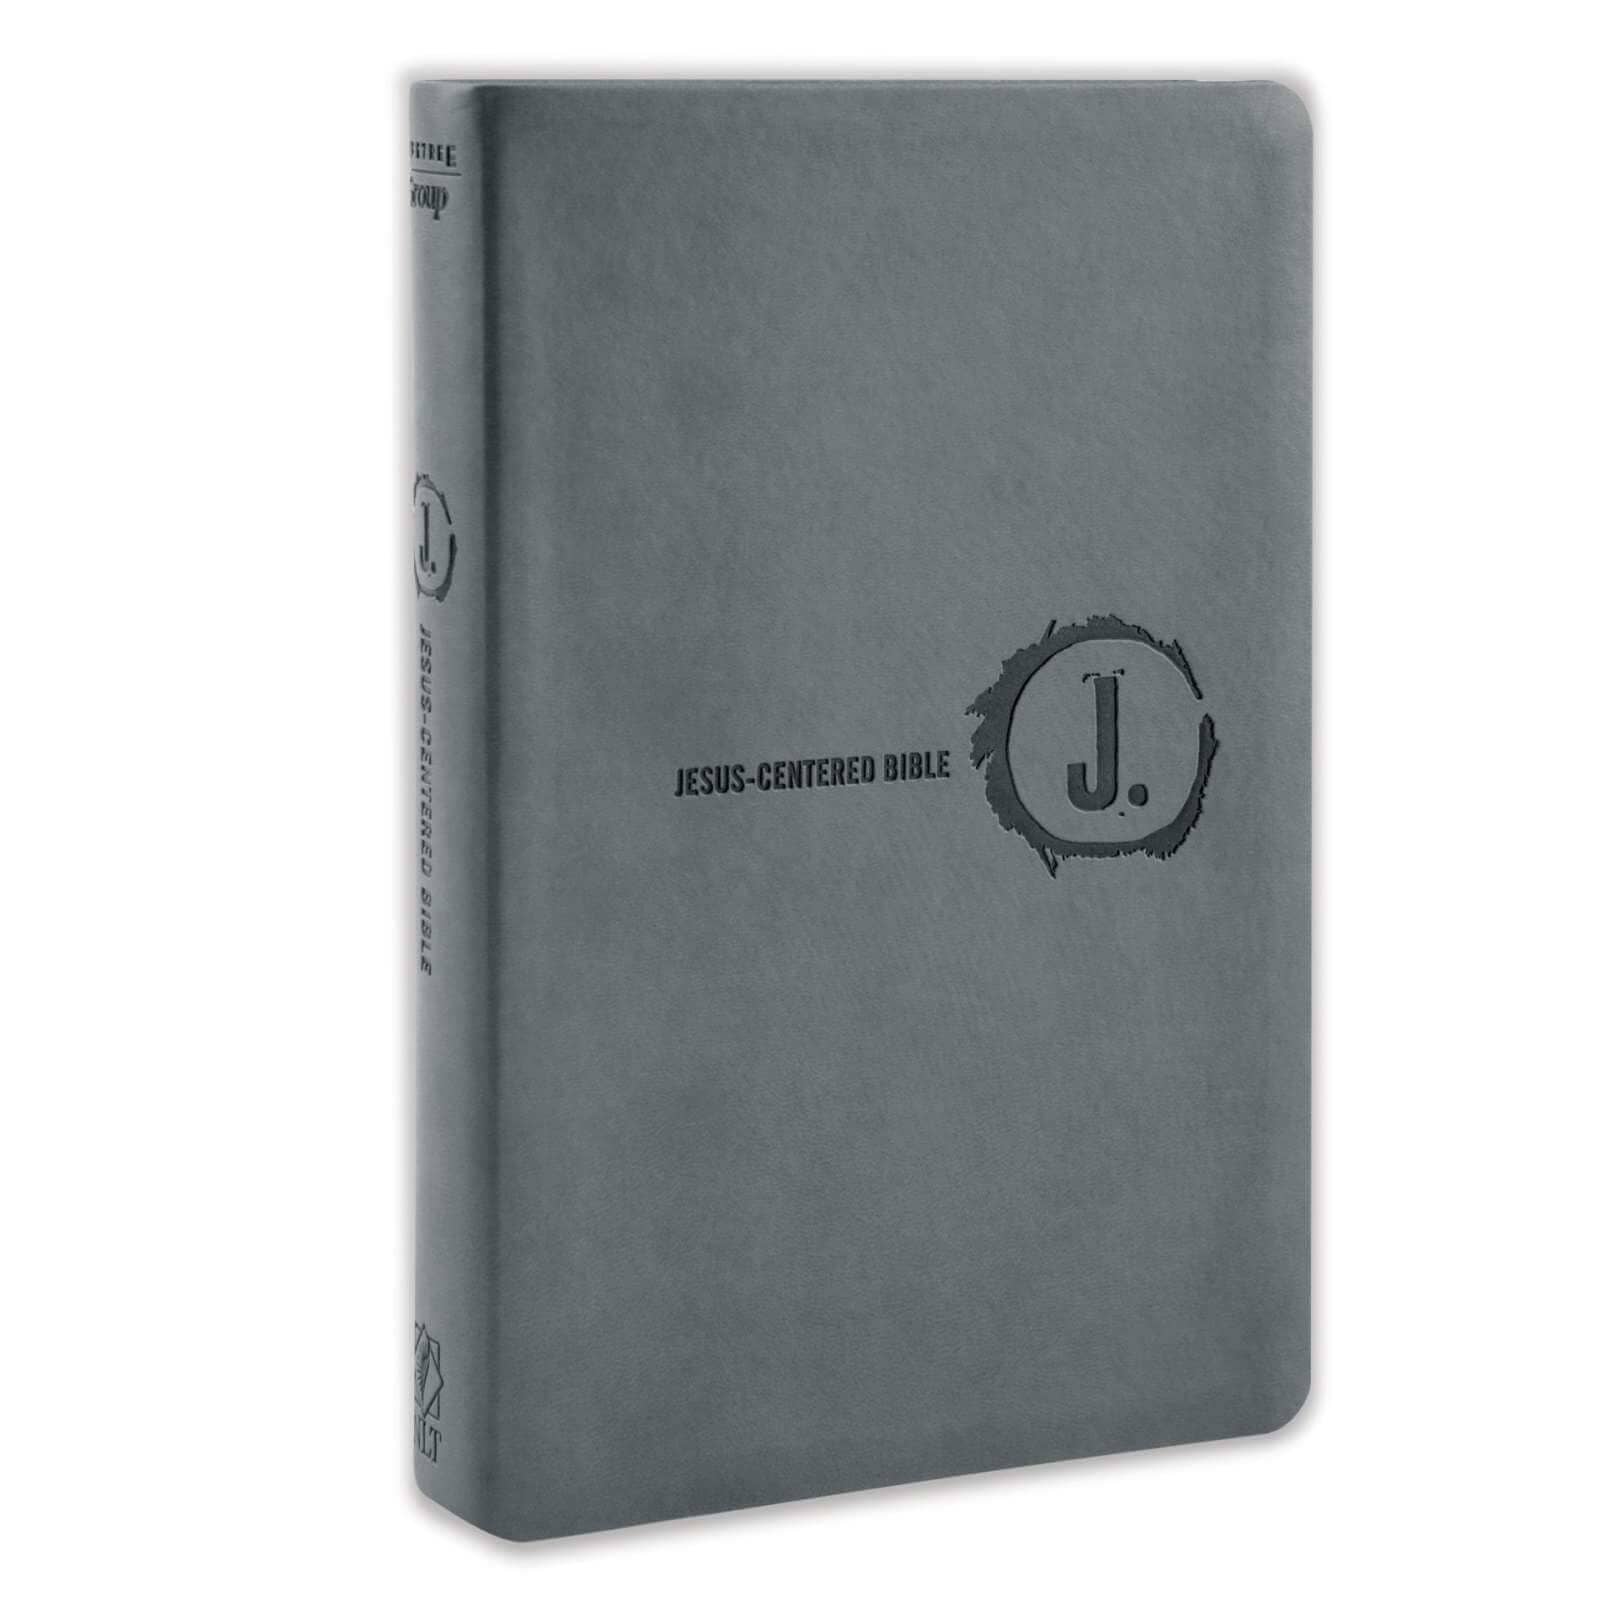 Jesus-Centered Bible NLT, Charcoal